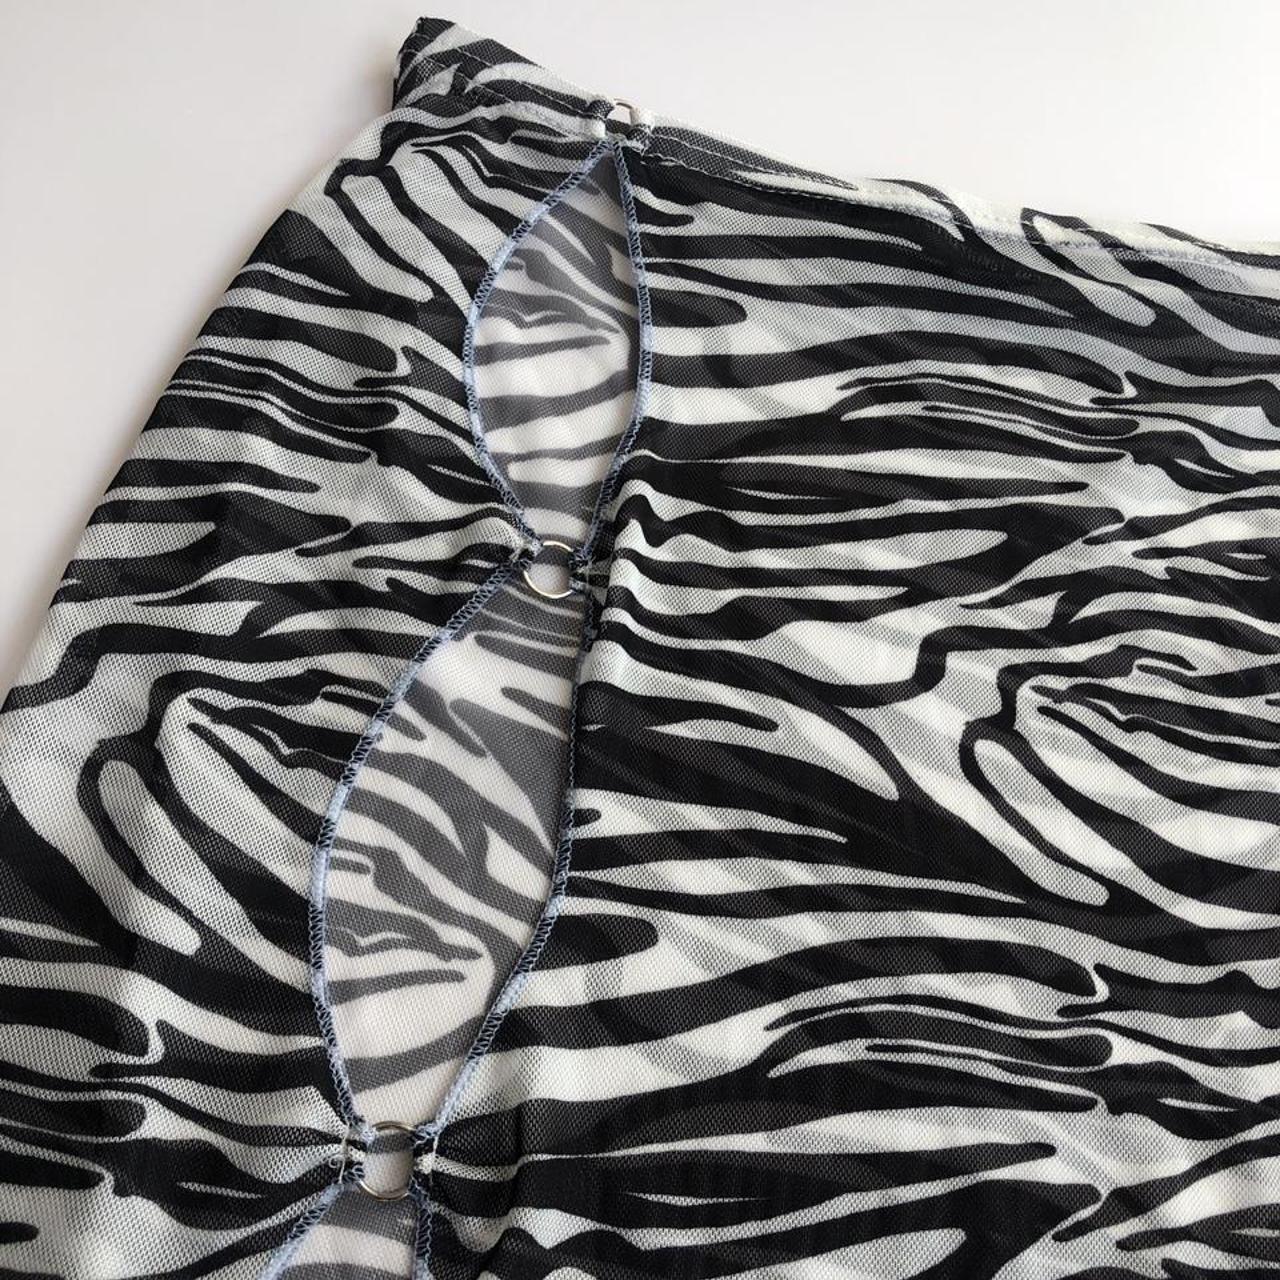 Product Image 4 - Zebra print mesh skirt with